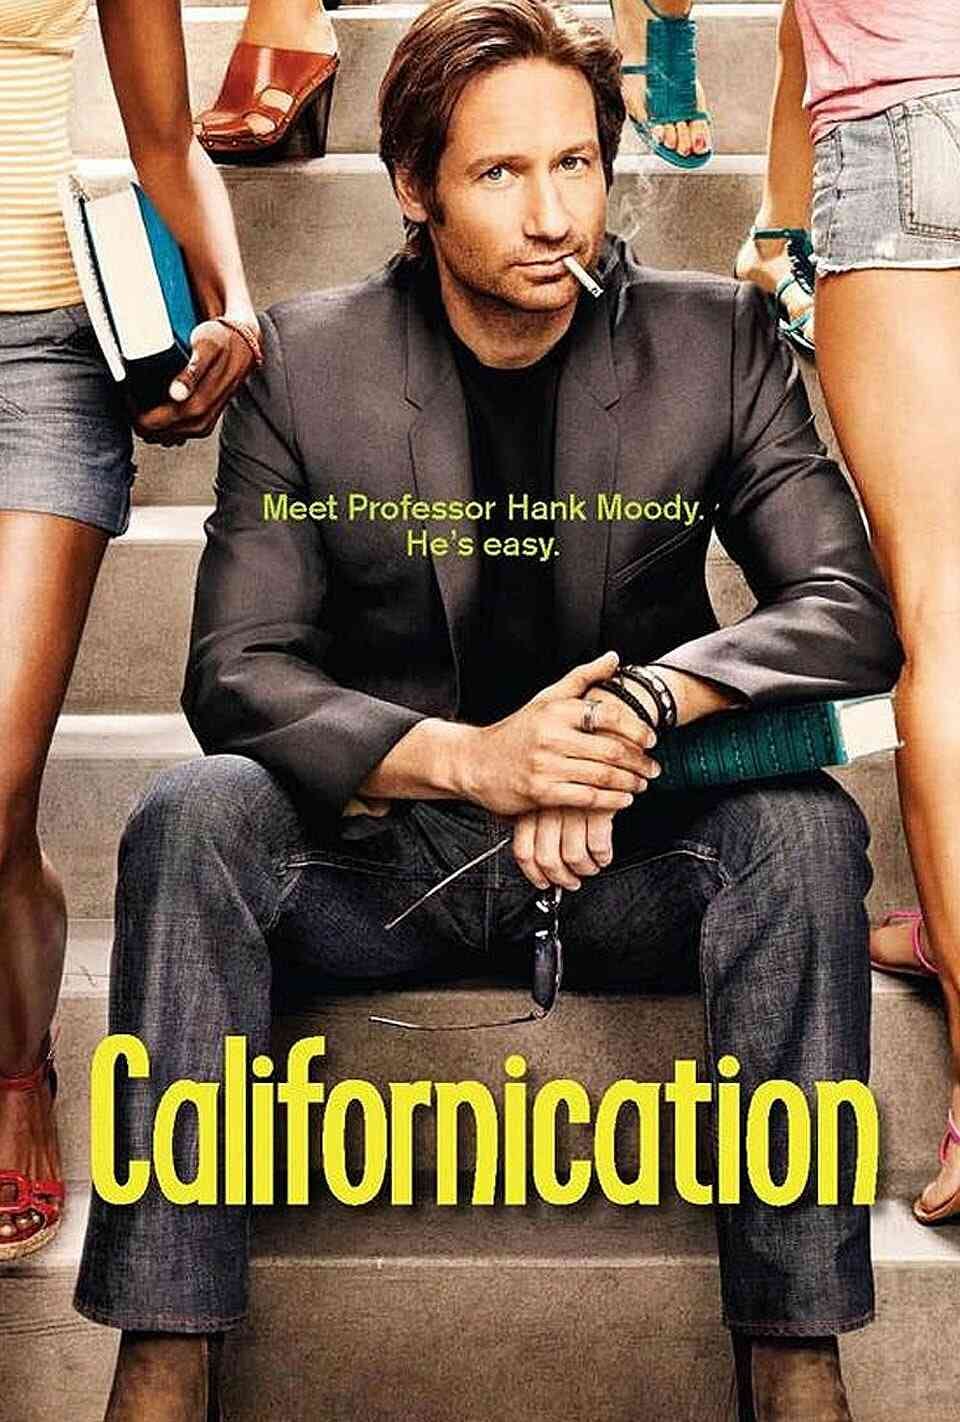 Read Californication screenplay.